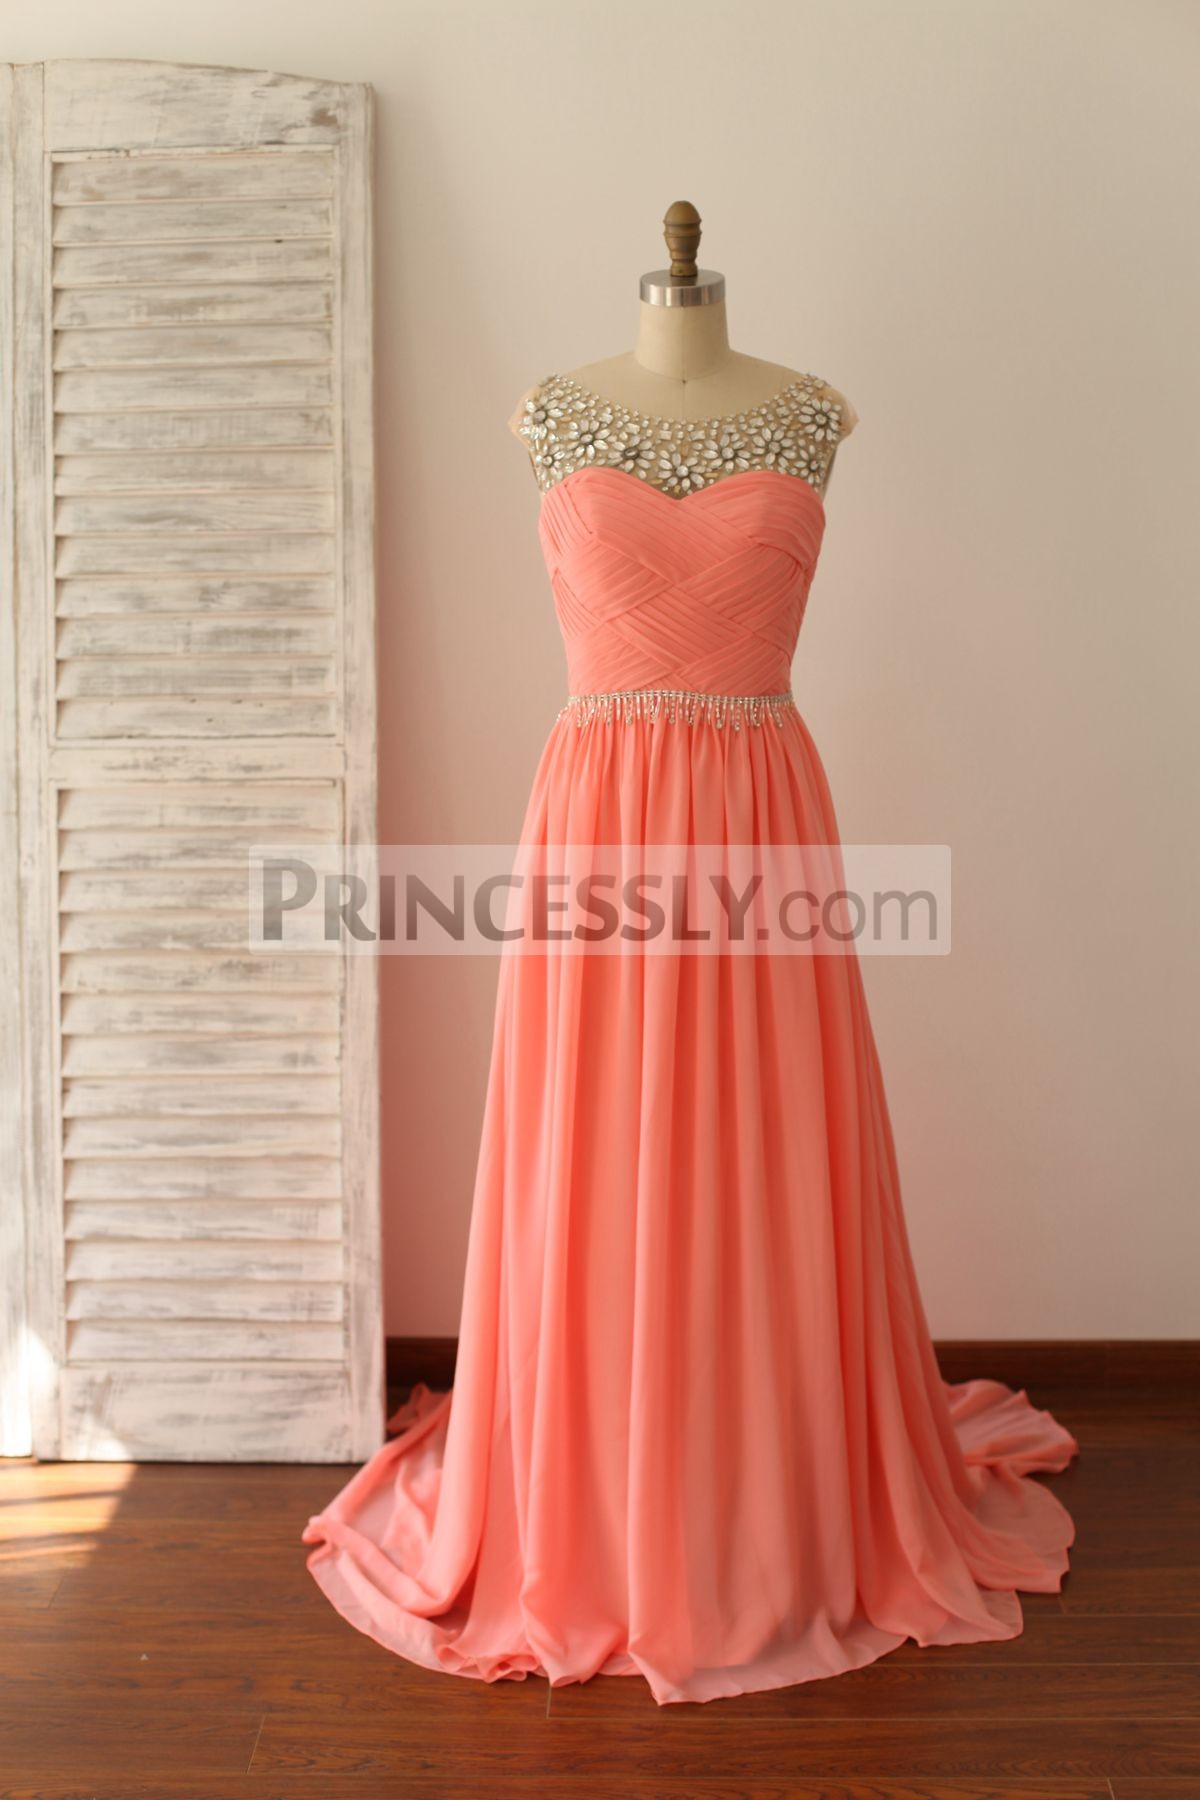 Princessly.com-K1000219-Beaded Coral Chiffon Long Prom Dress-31